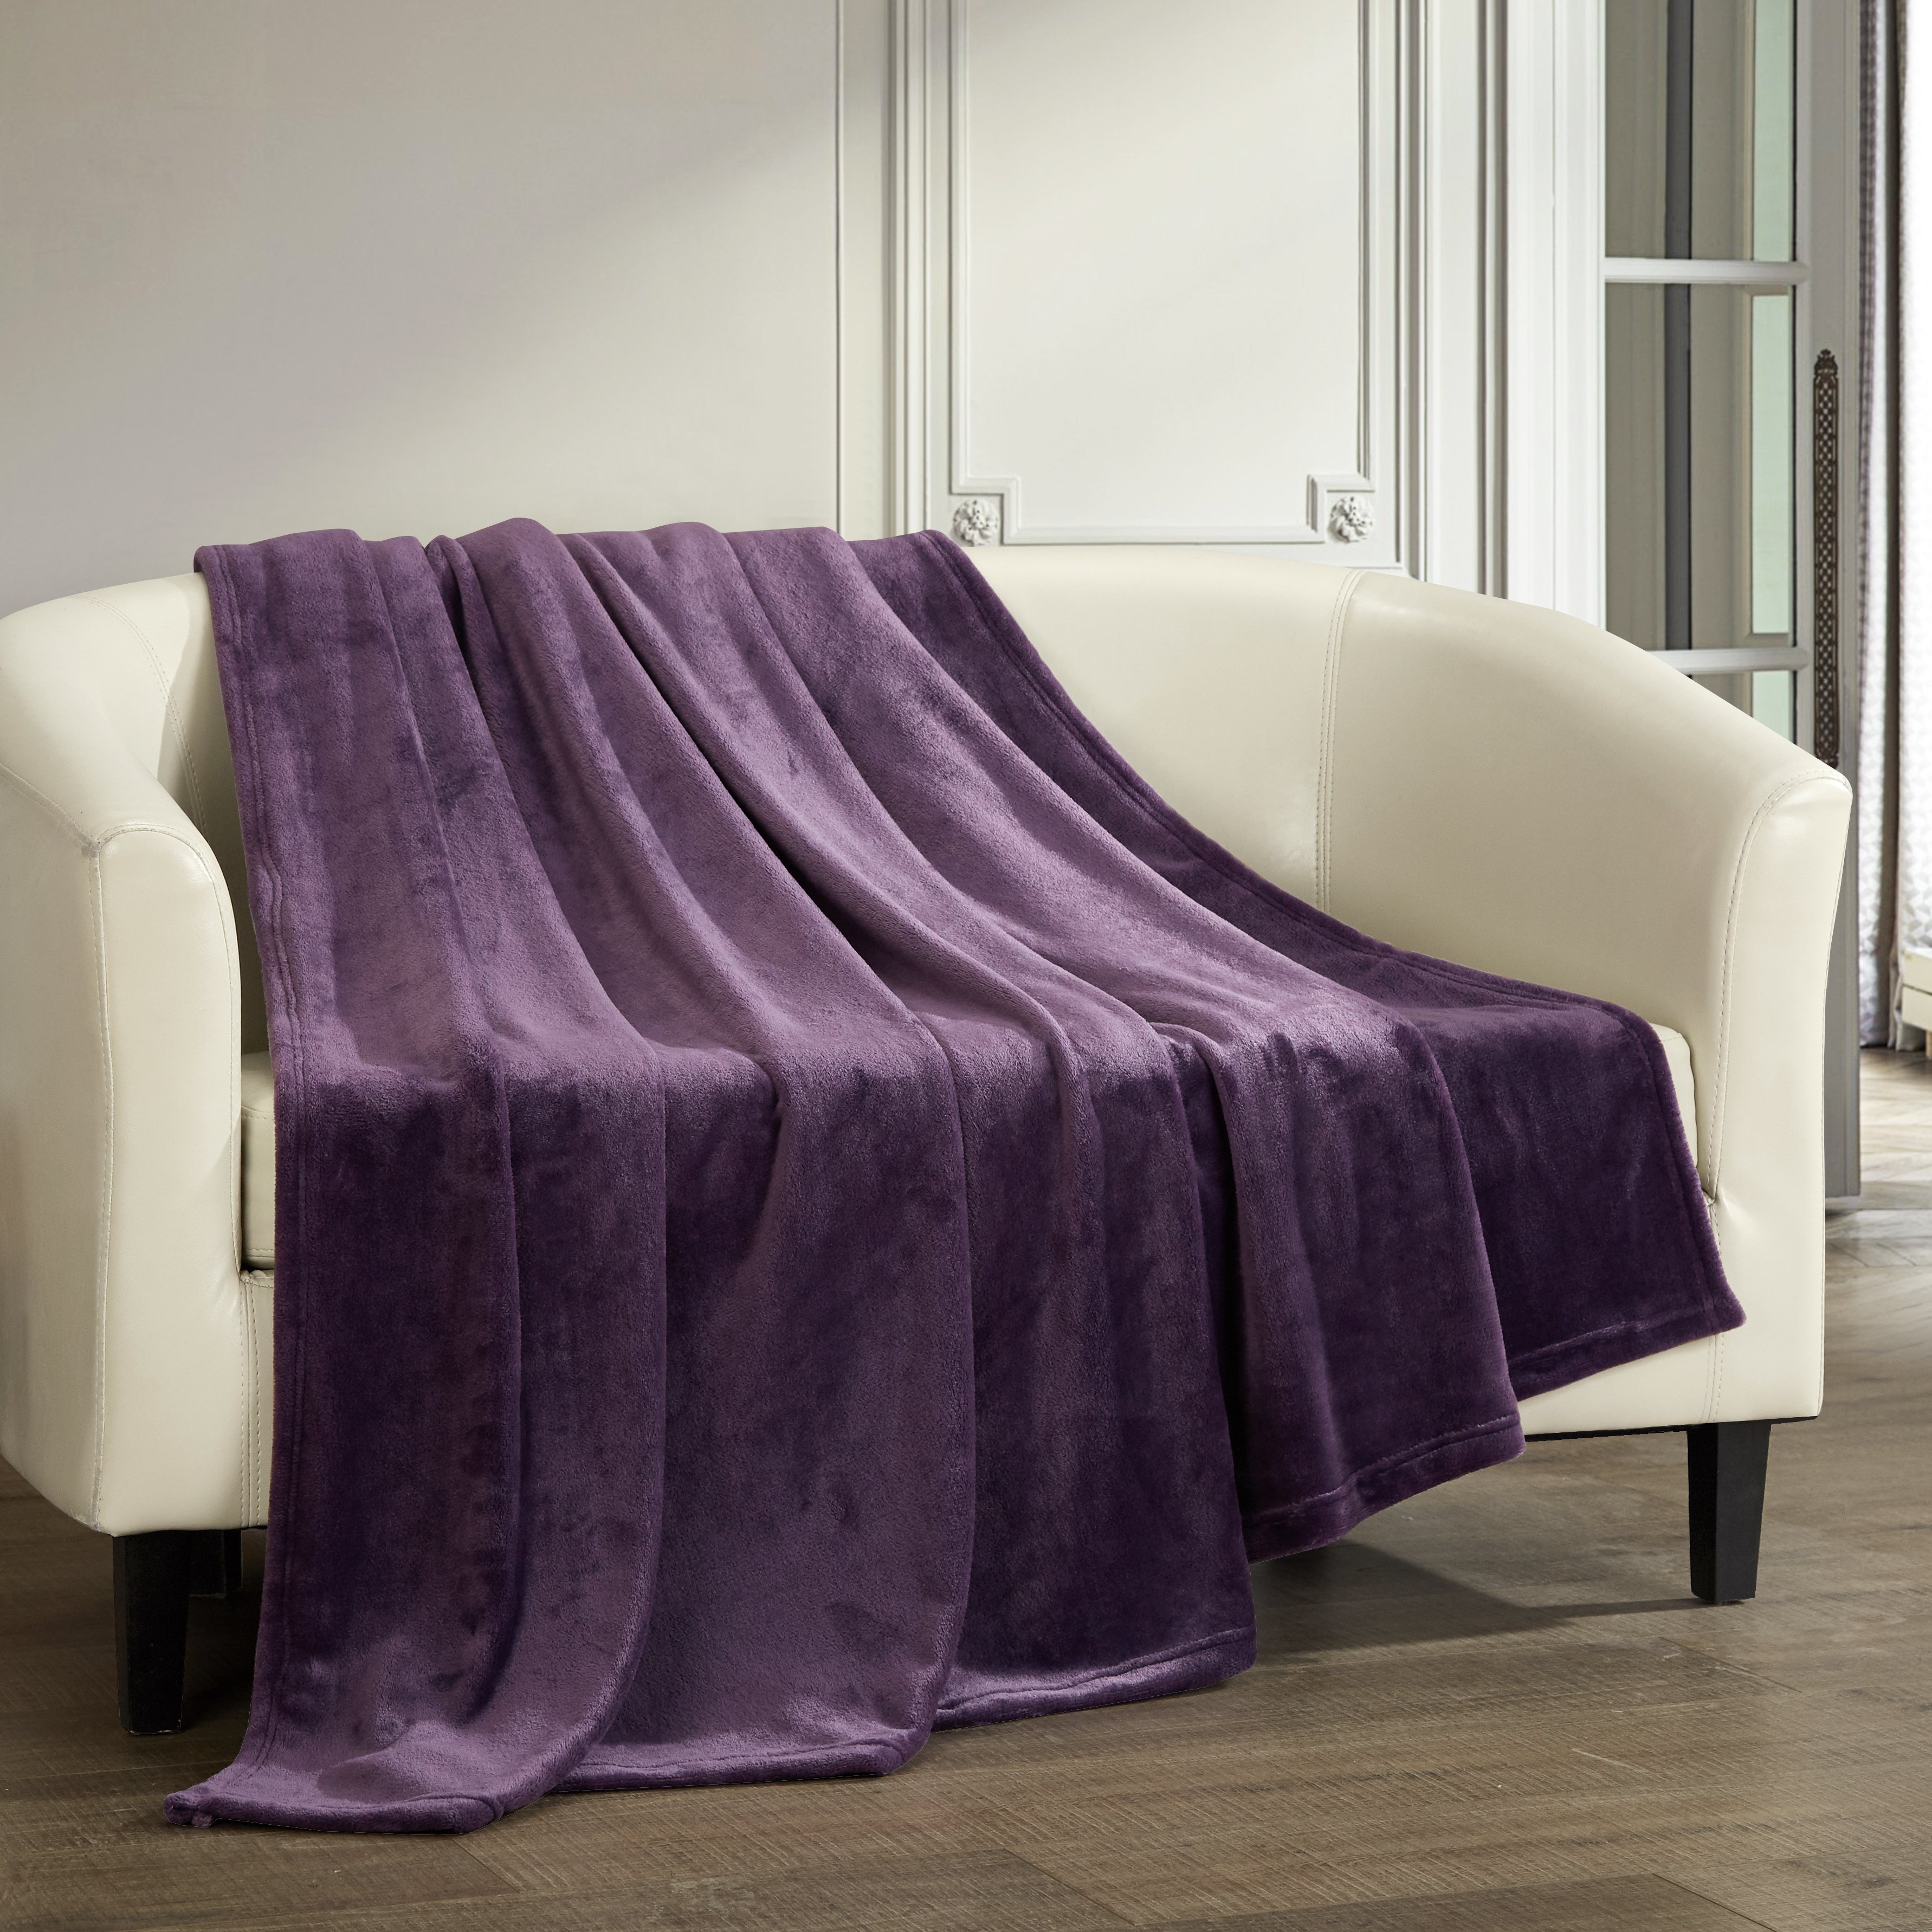 Kaeden Throw Blanket Cozy Super Soft Ultra Plush Micro Mink Fleece Decorative Design - Plum